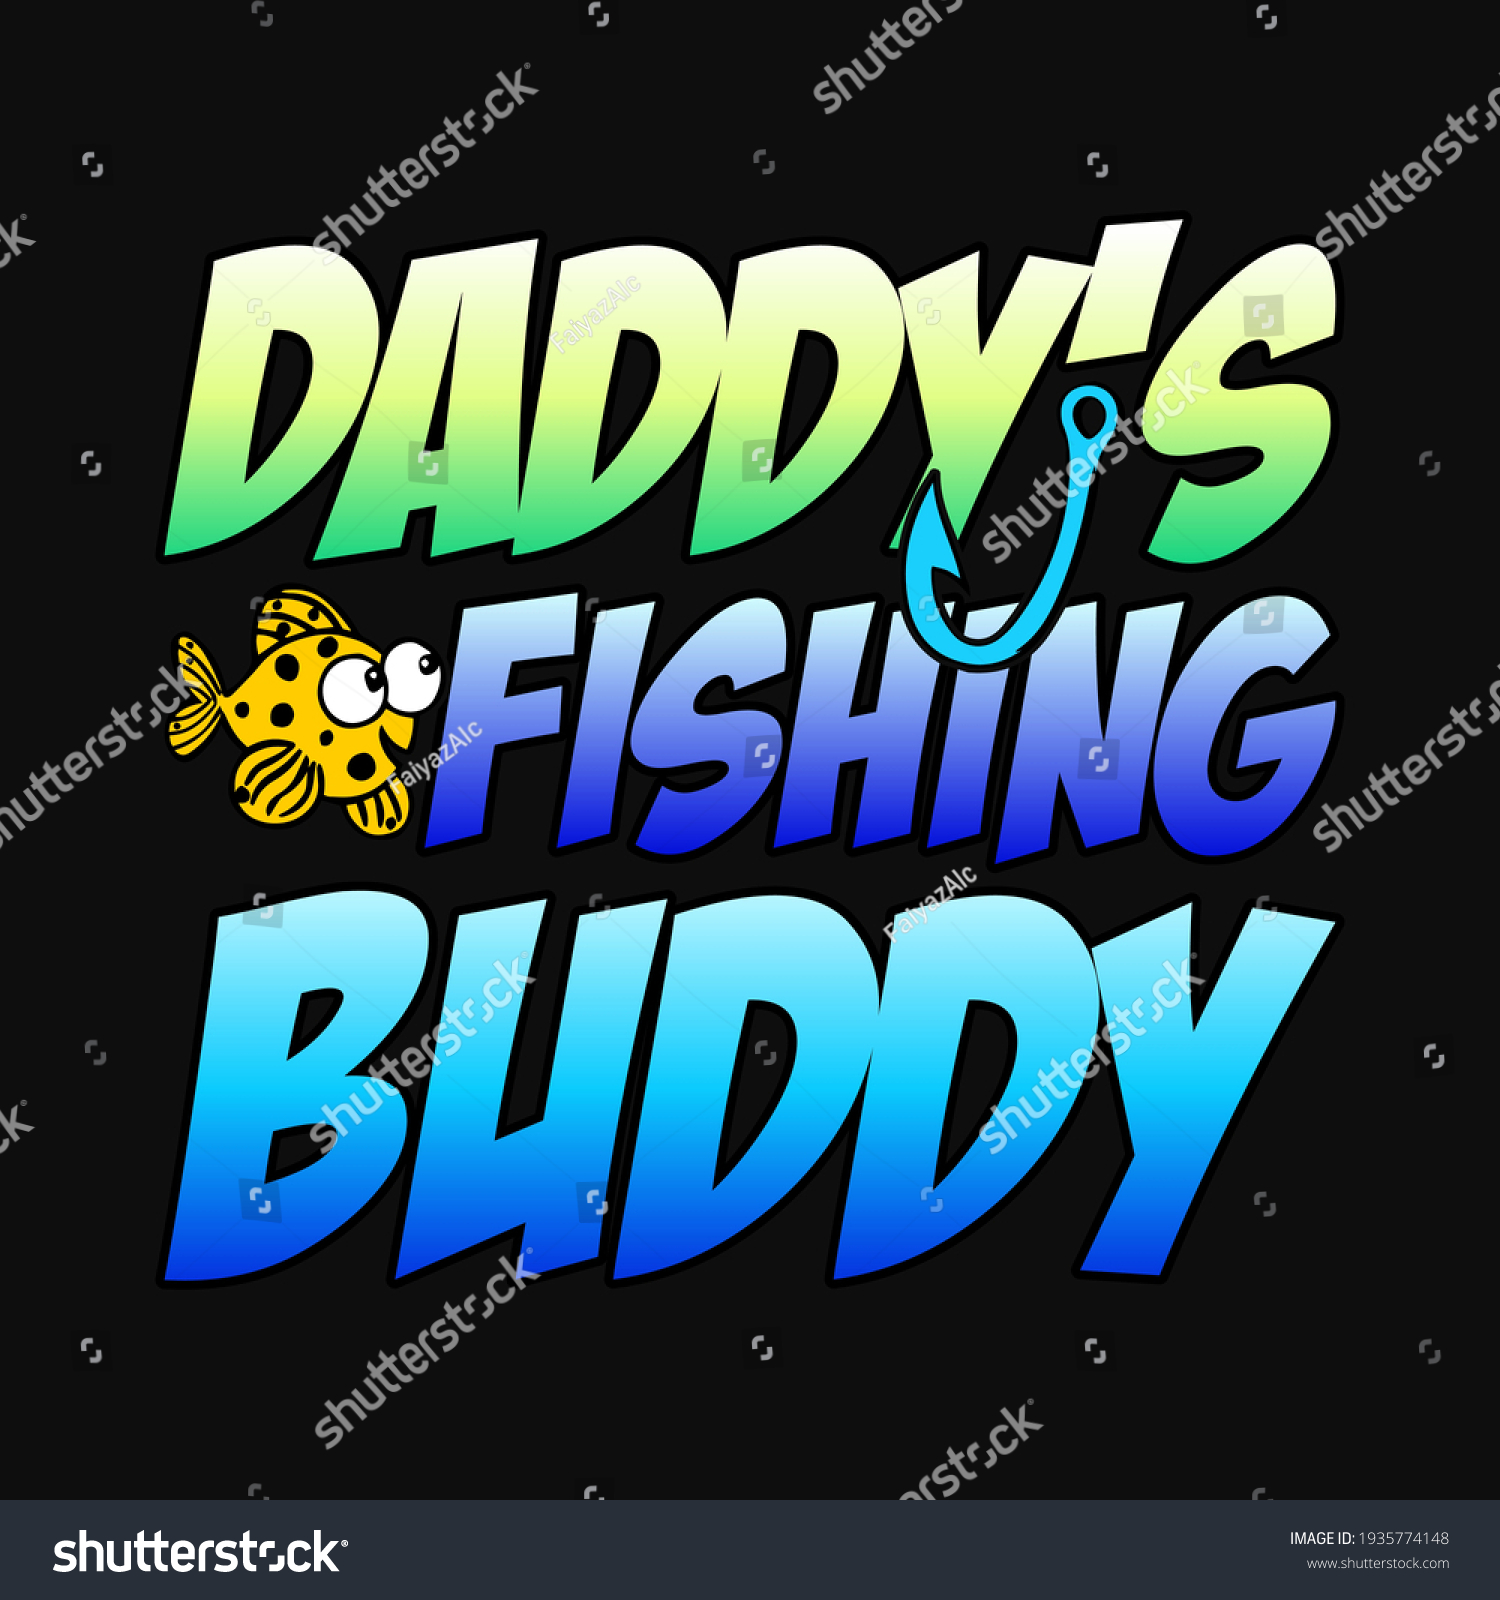 SVG of Daddy's fishing buddy - fisherman, boat, fish vector, vintage fishing emblems, fishing labels, badges - fishing t shirt design svg